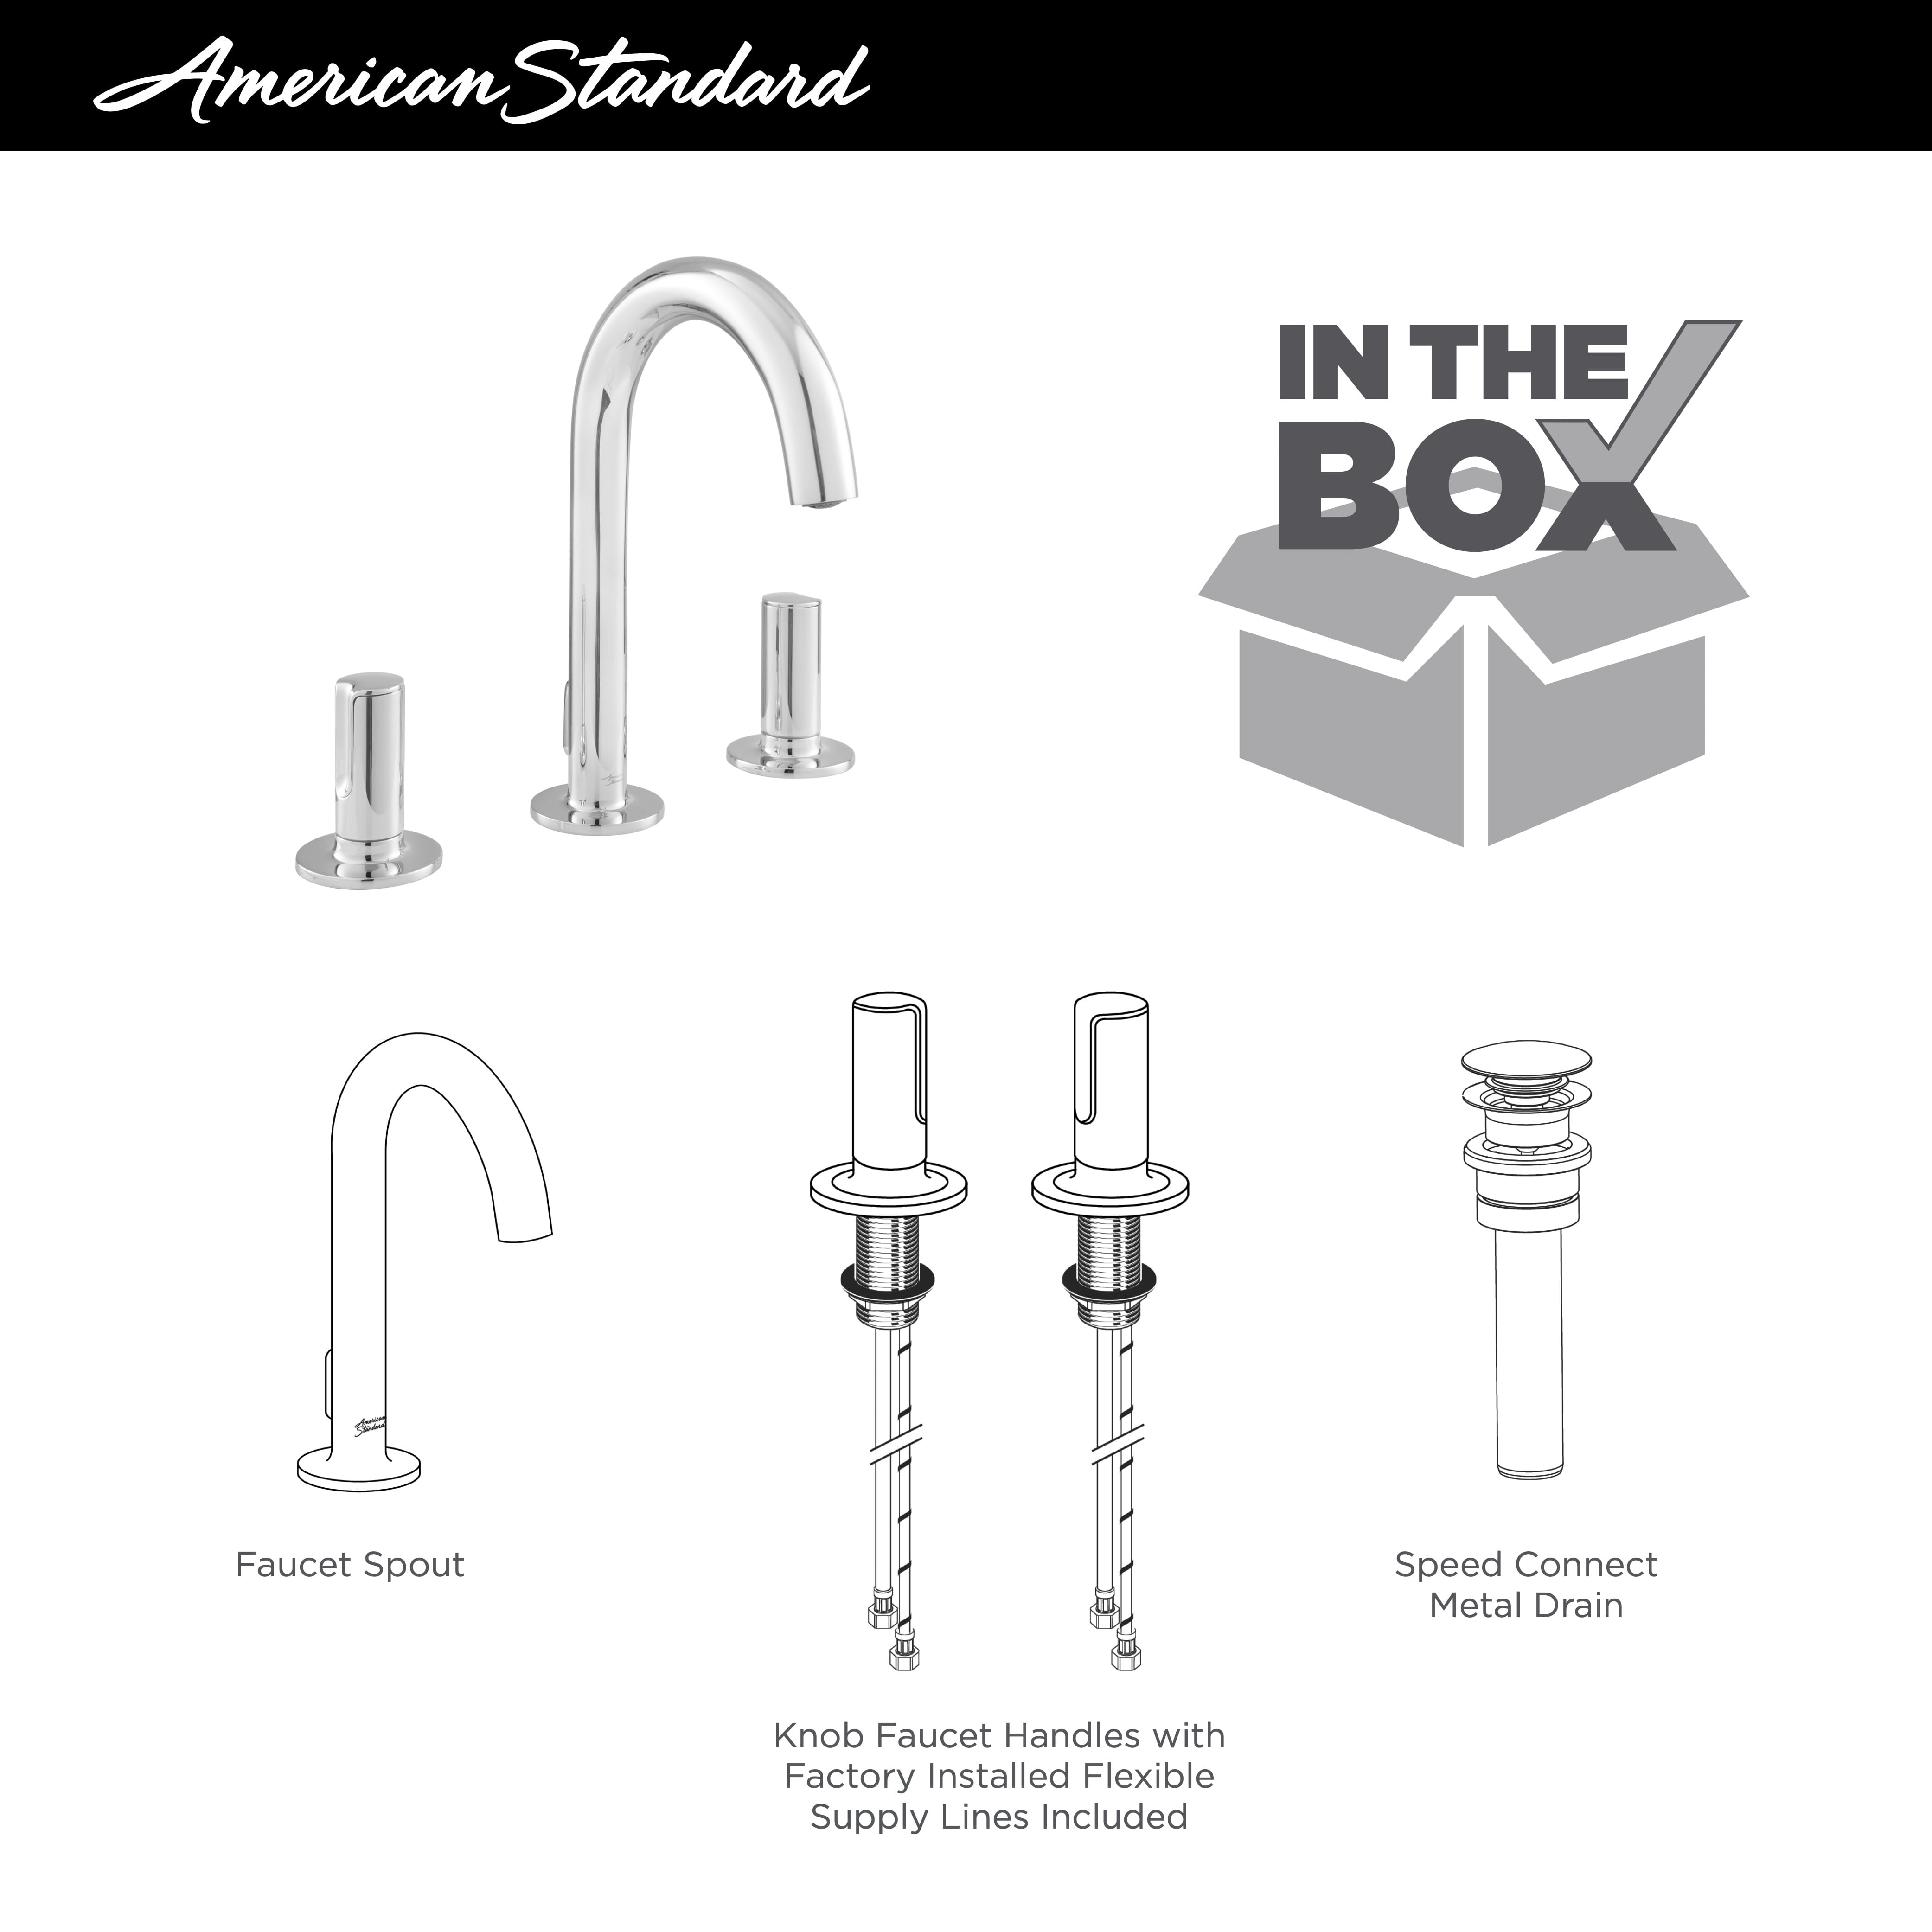 Studio® S 8-Inch Widespread 2-Handle Bathroom Faucet 1.2 gpm/4.5 L/min With Knob Handles